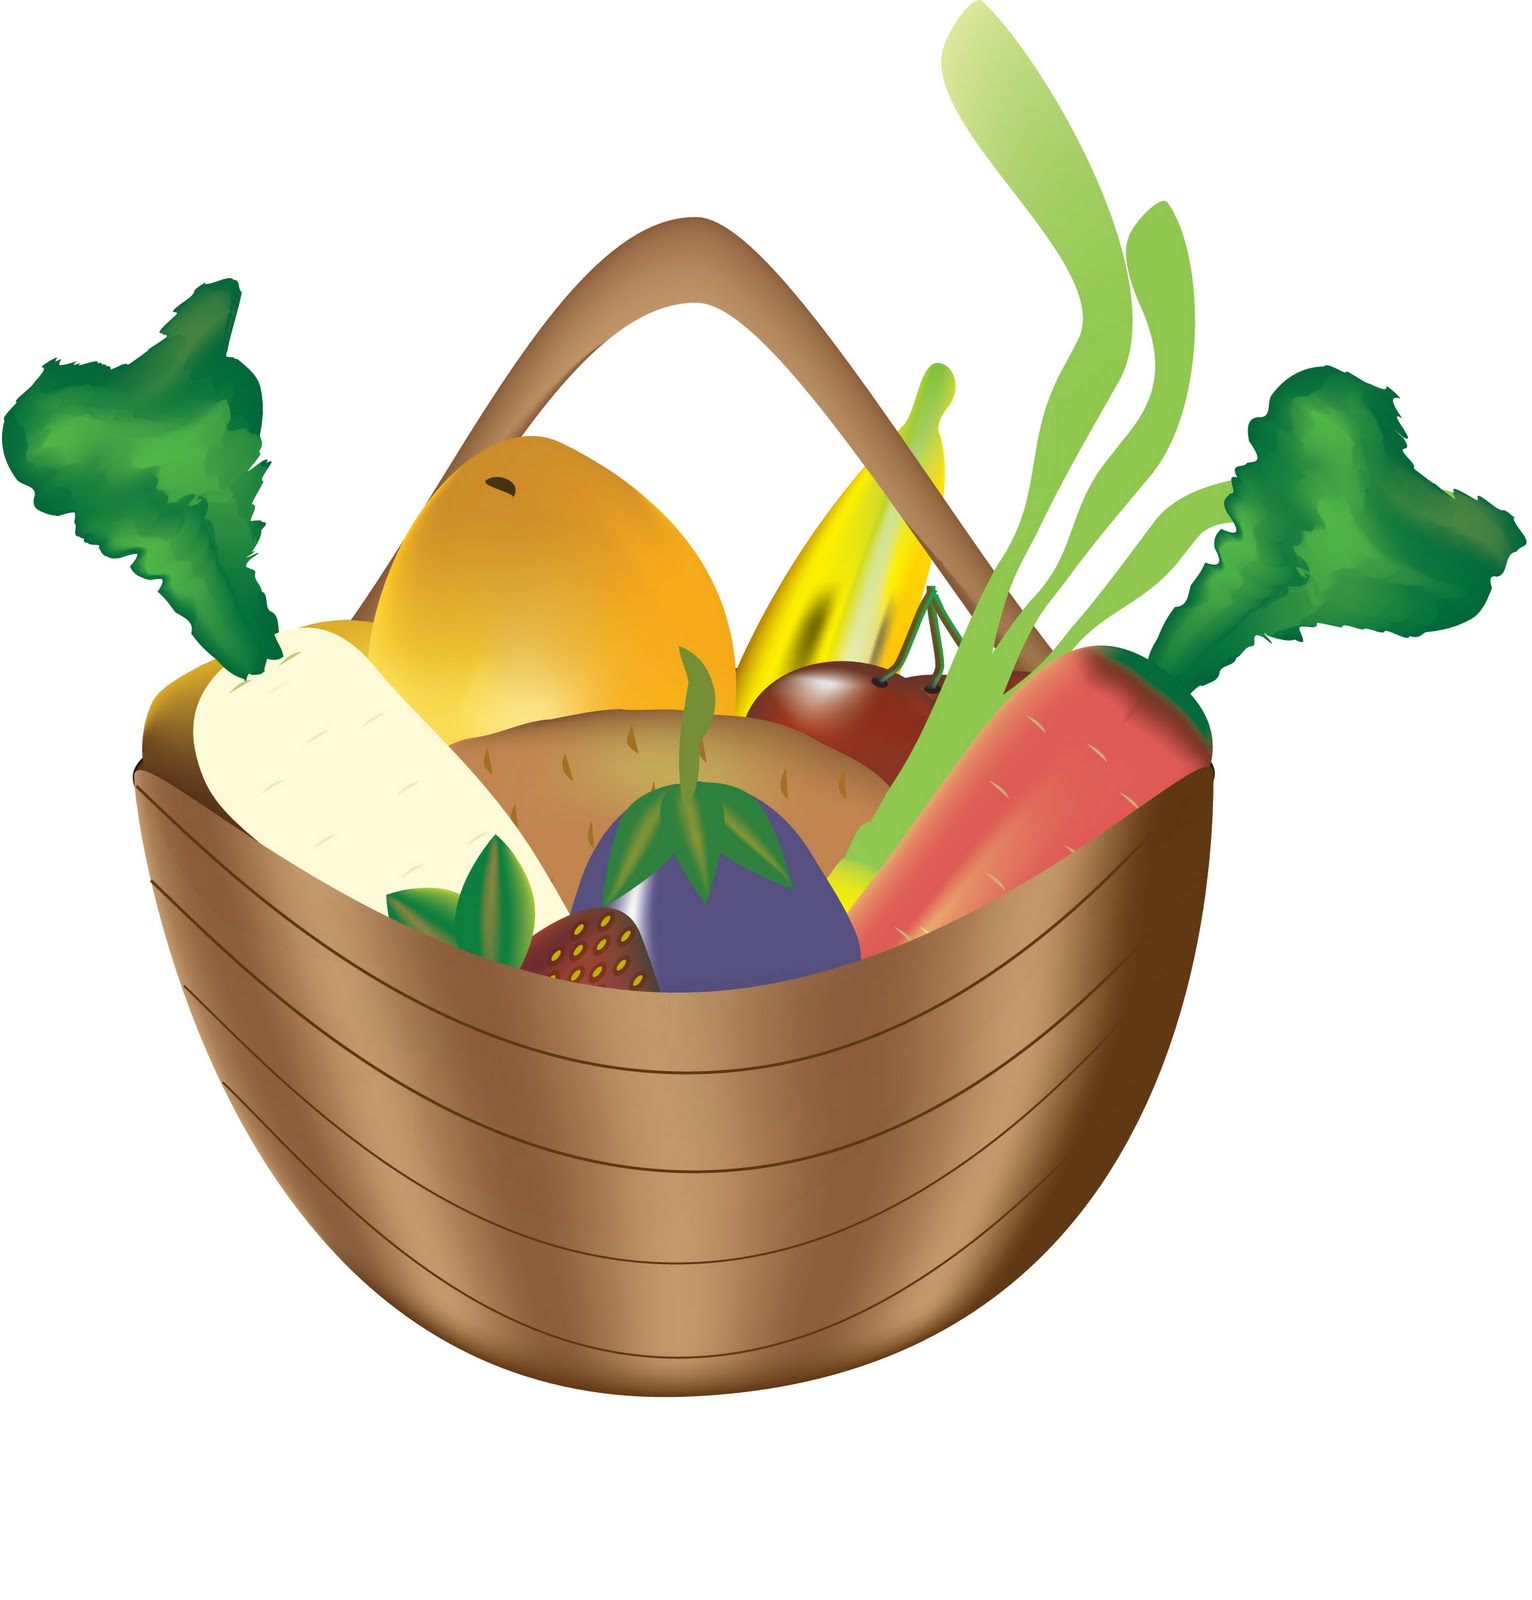 Vegetable Basket Clipart at GetDrawings | Free download